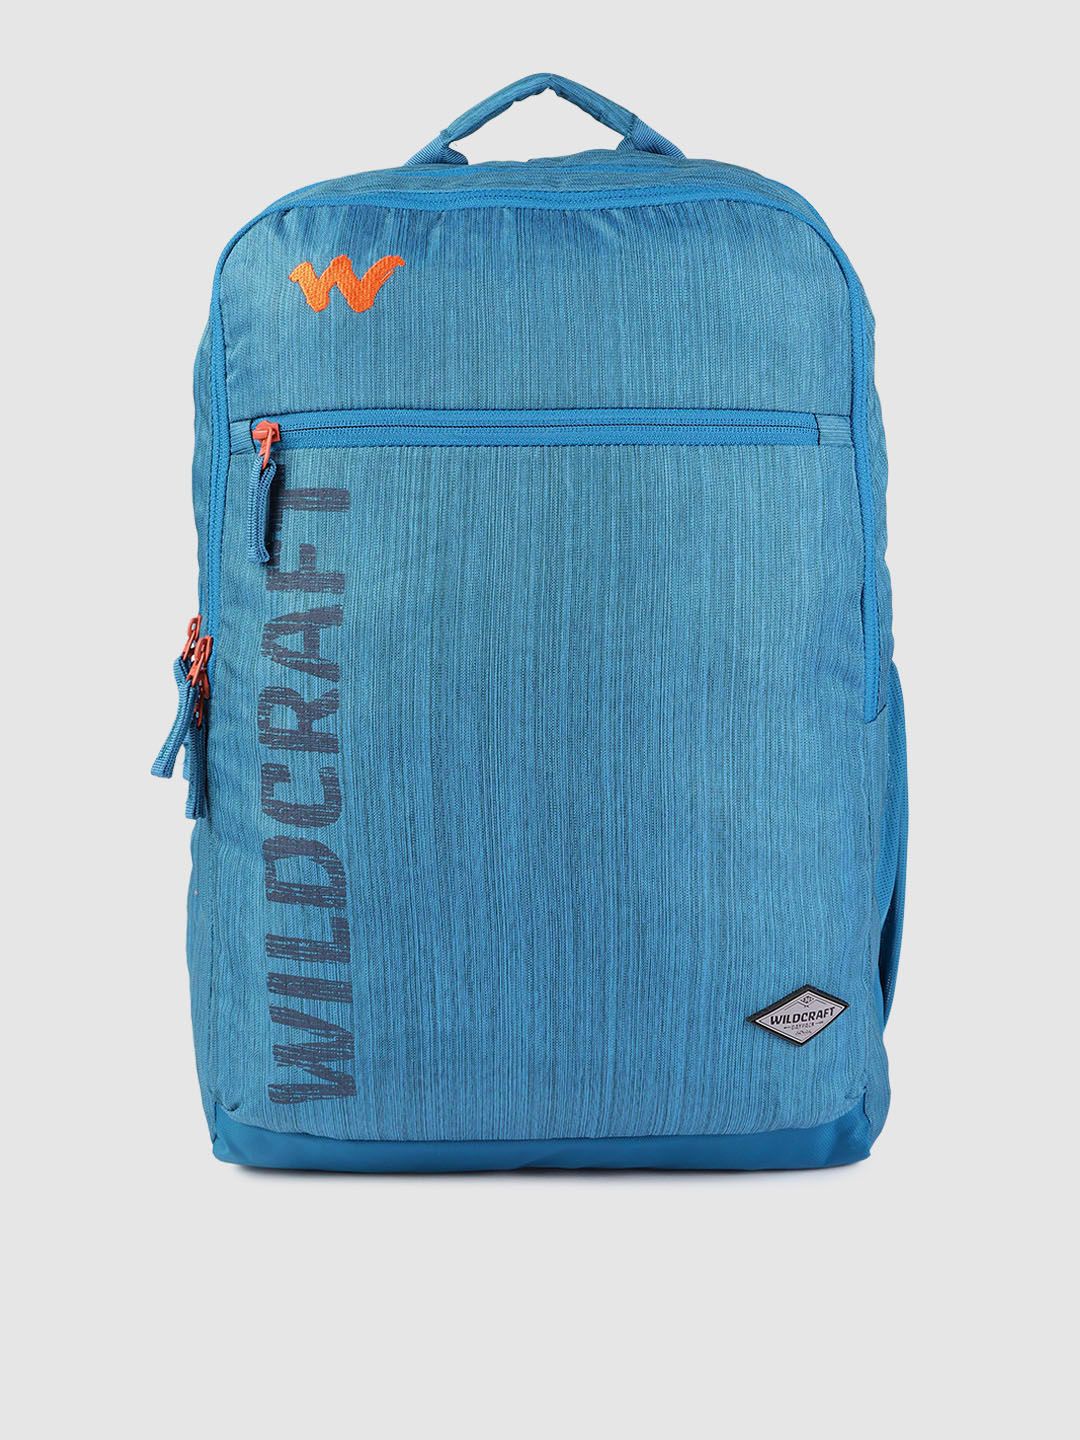 Wildcraft Unisex Blue Typography Evo1 Mel Backpack Price in India